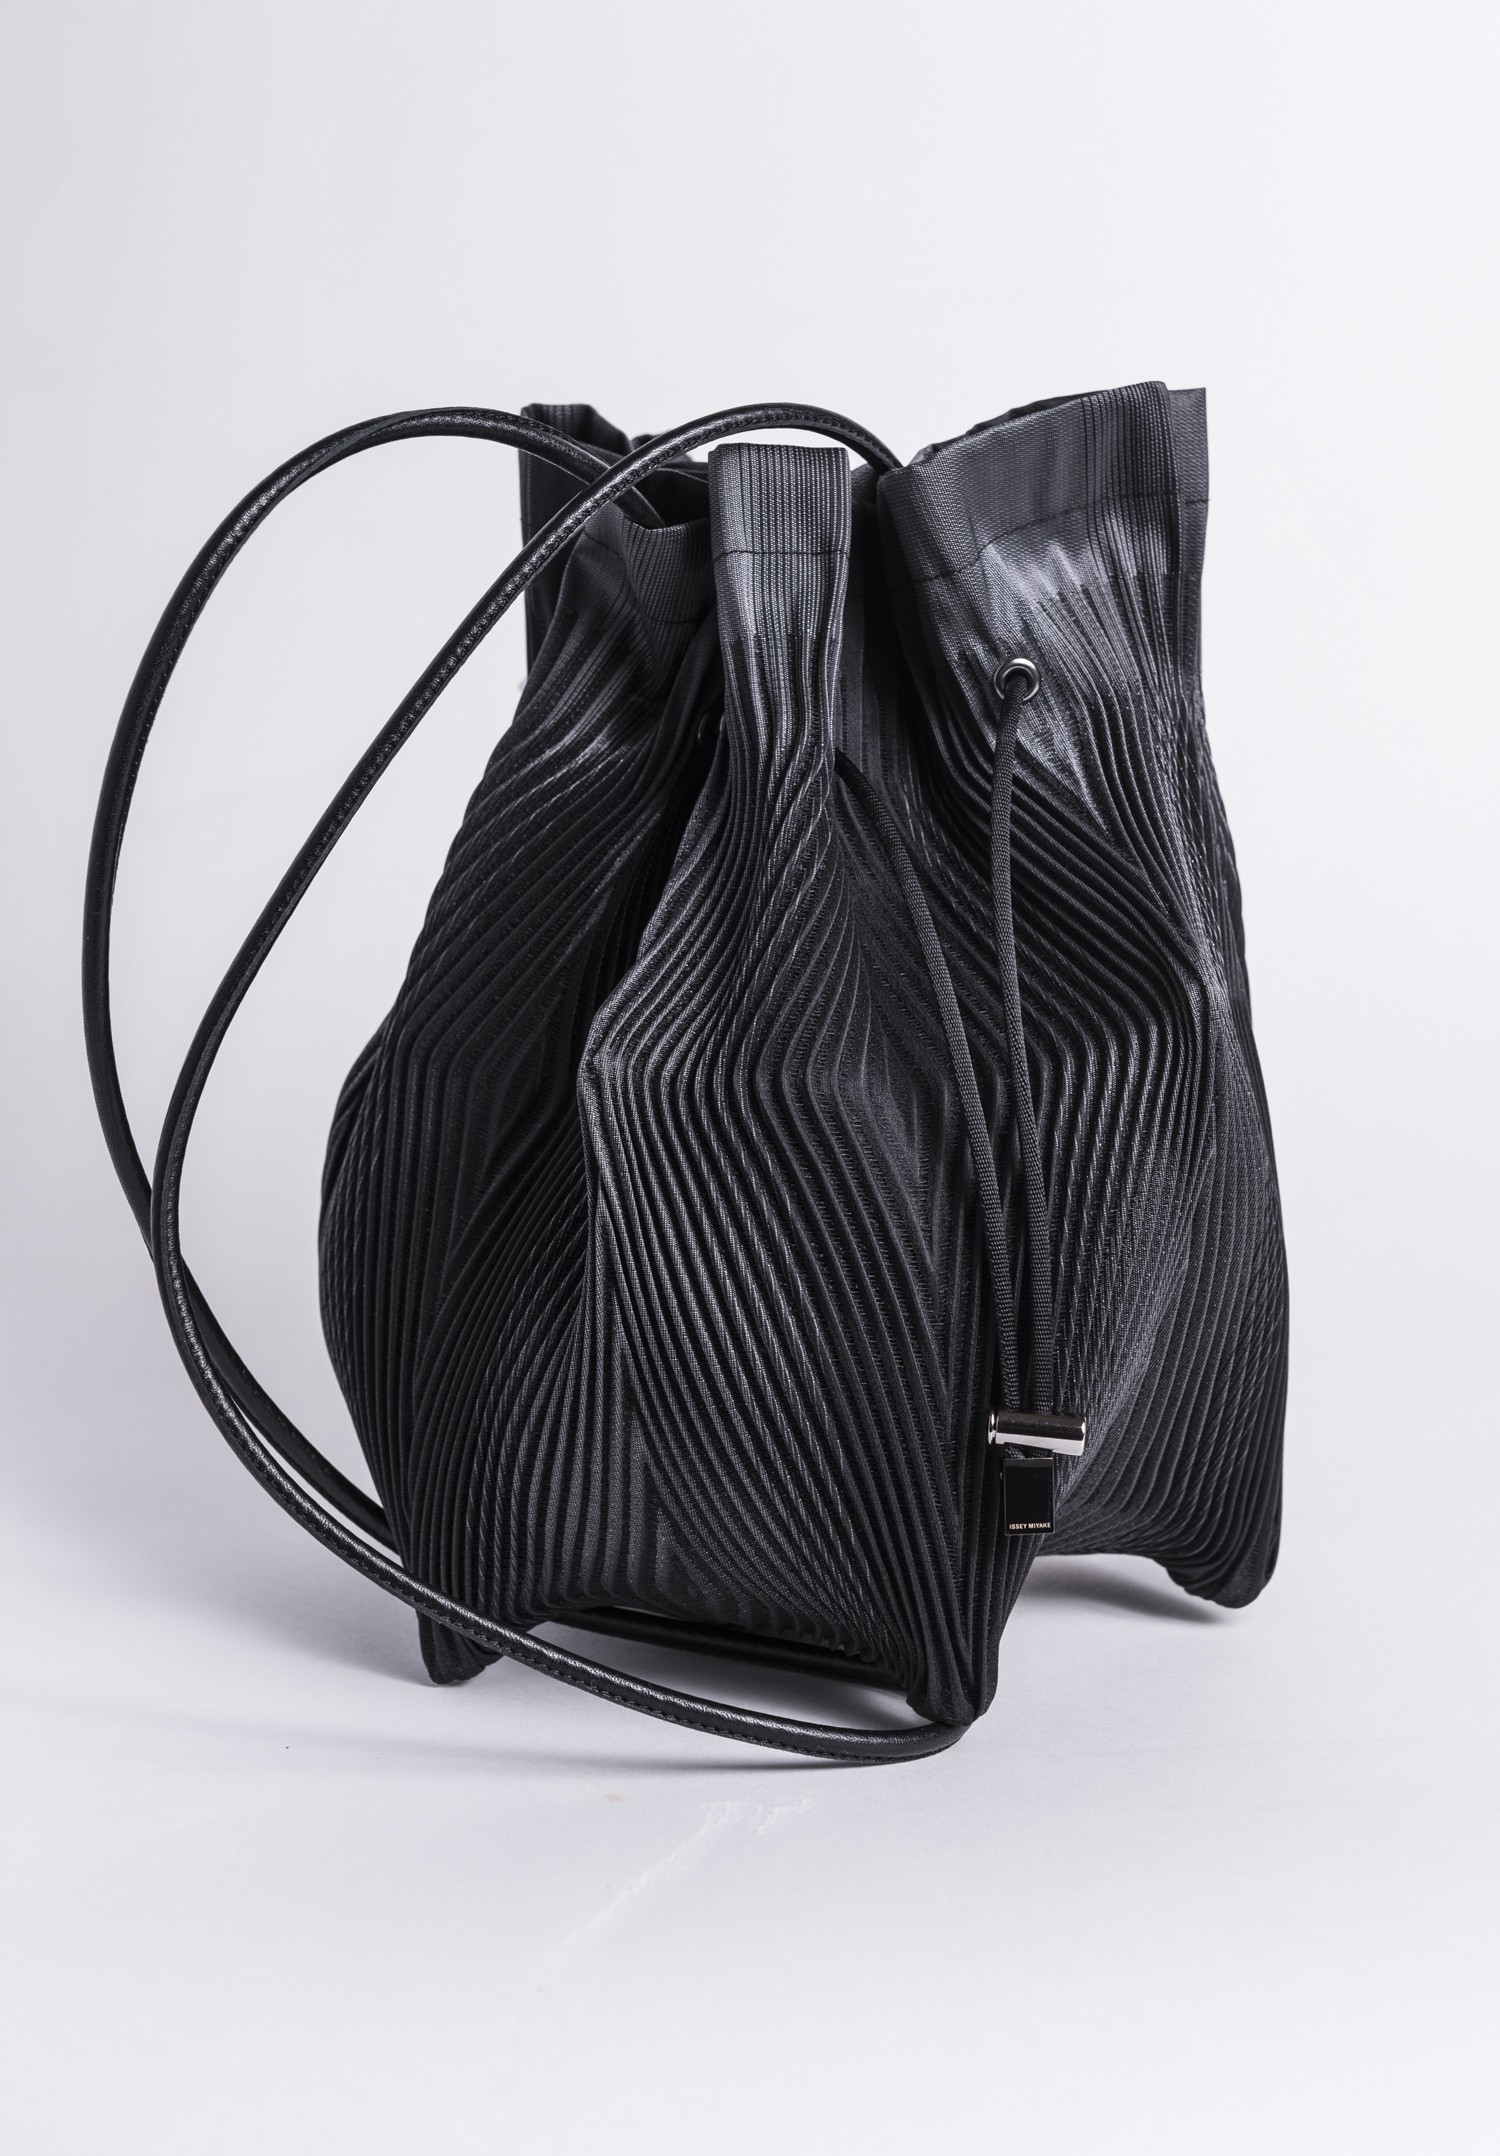 Issey Miyake Hexagonal Pleated Pouch Handbag in Dark Grey | Santa Fe ...